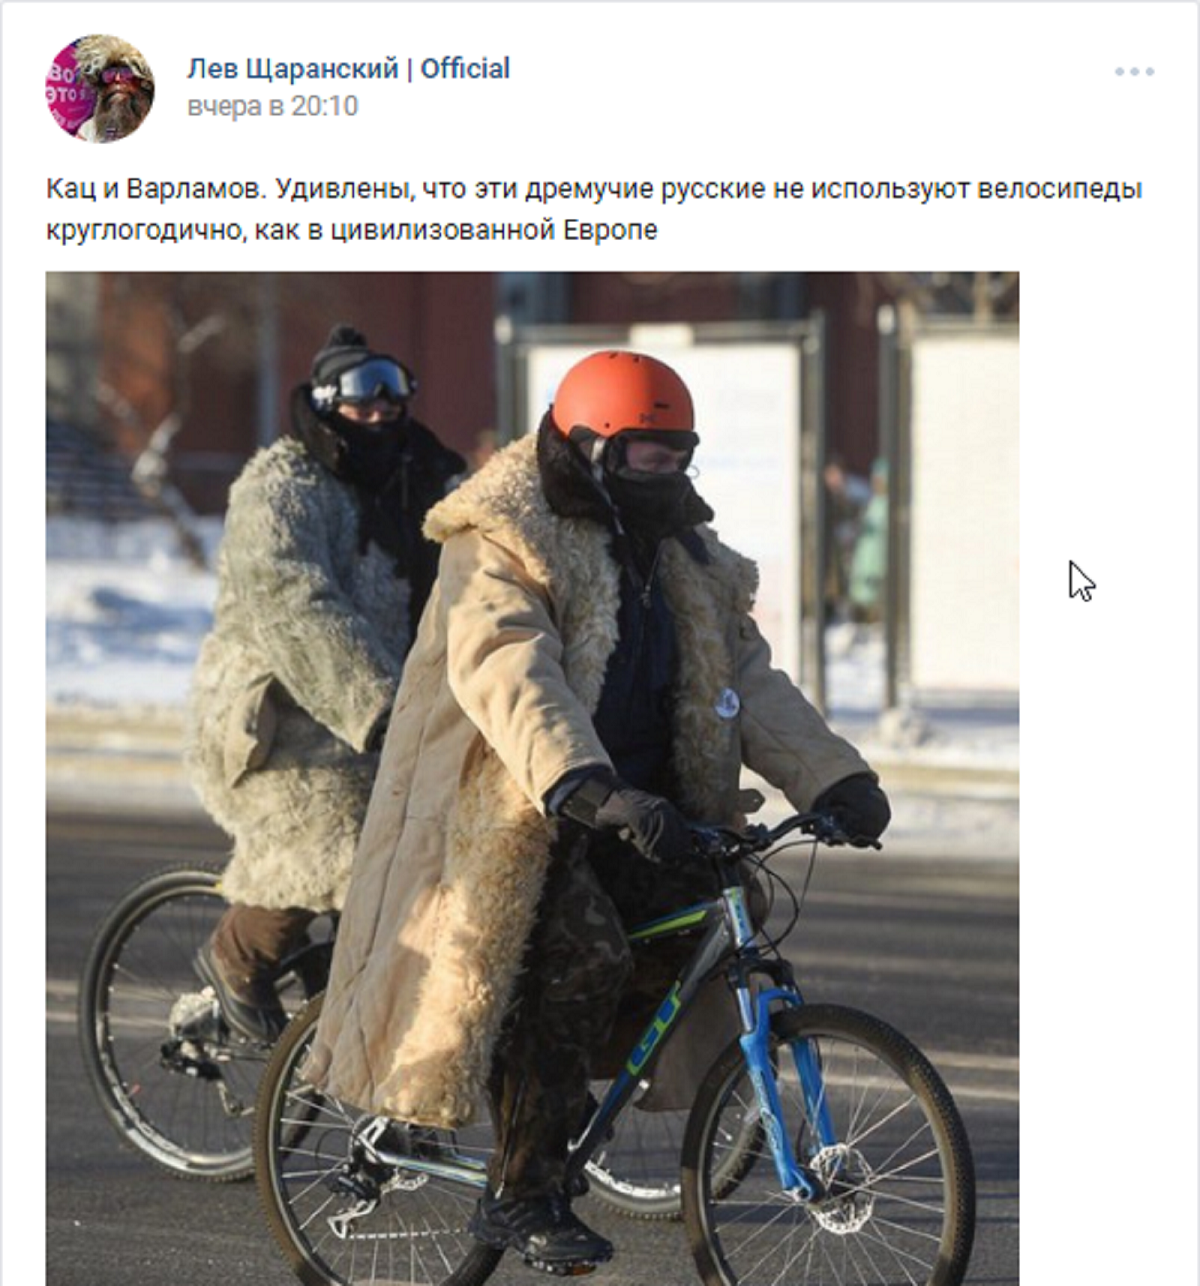 bike ride - Russia, Humor, Sarcasm, Politics, A bike, Liberals